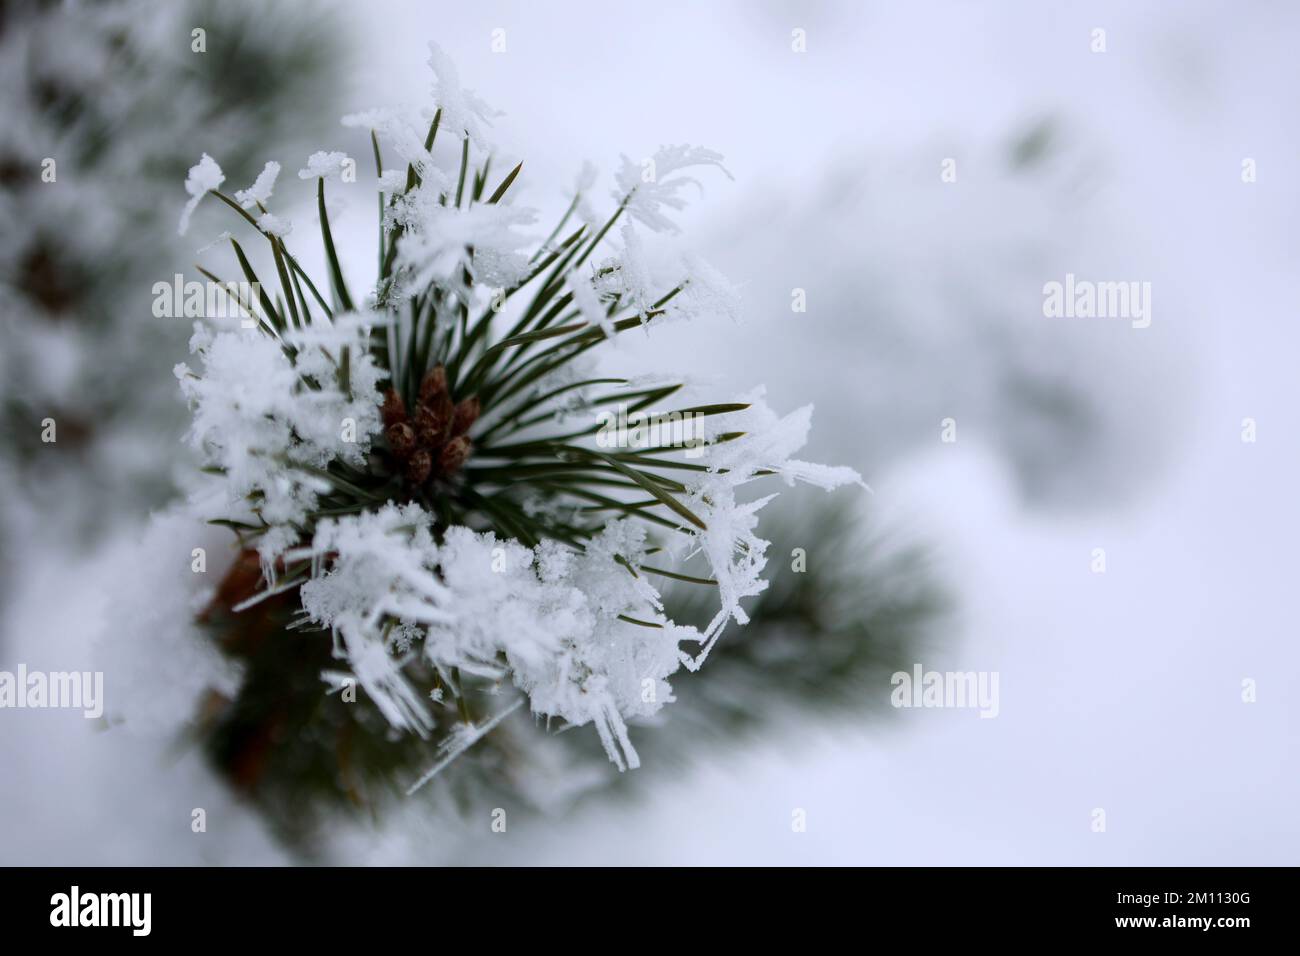 YABLUNYTSIA, UKRAINE - DECEMBER 1, 2022 - Hoarfrost covers the needles of a pine tree in the Carpathian Mountains in winter, Yablunytsia village, Ivan Stock Photo